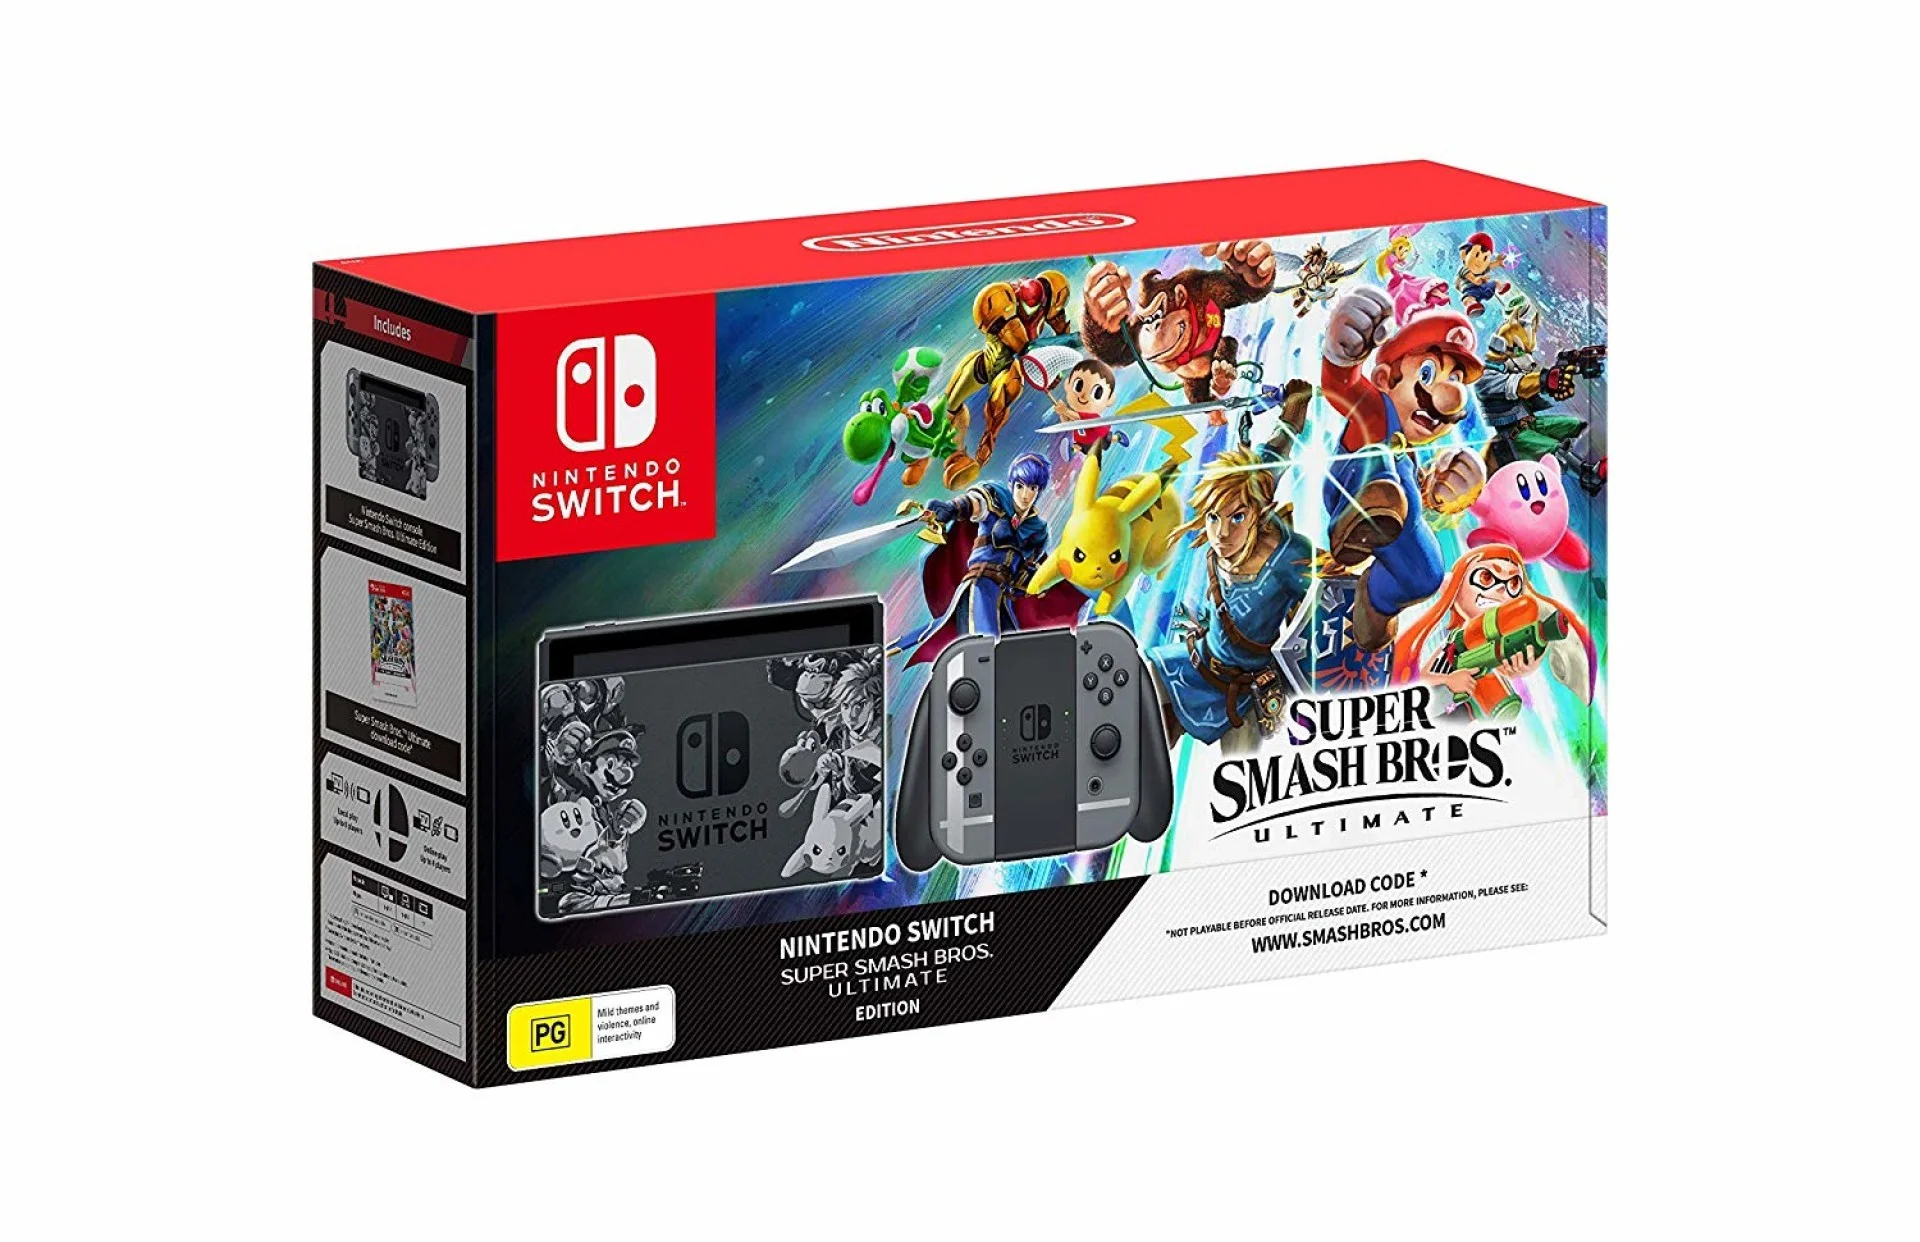  Nintendo Switch Super Smash Bros Ultimate Console [AUS]